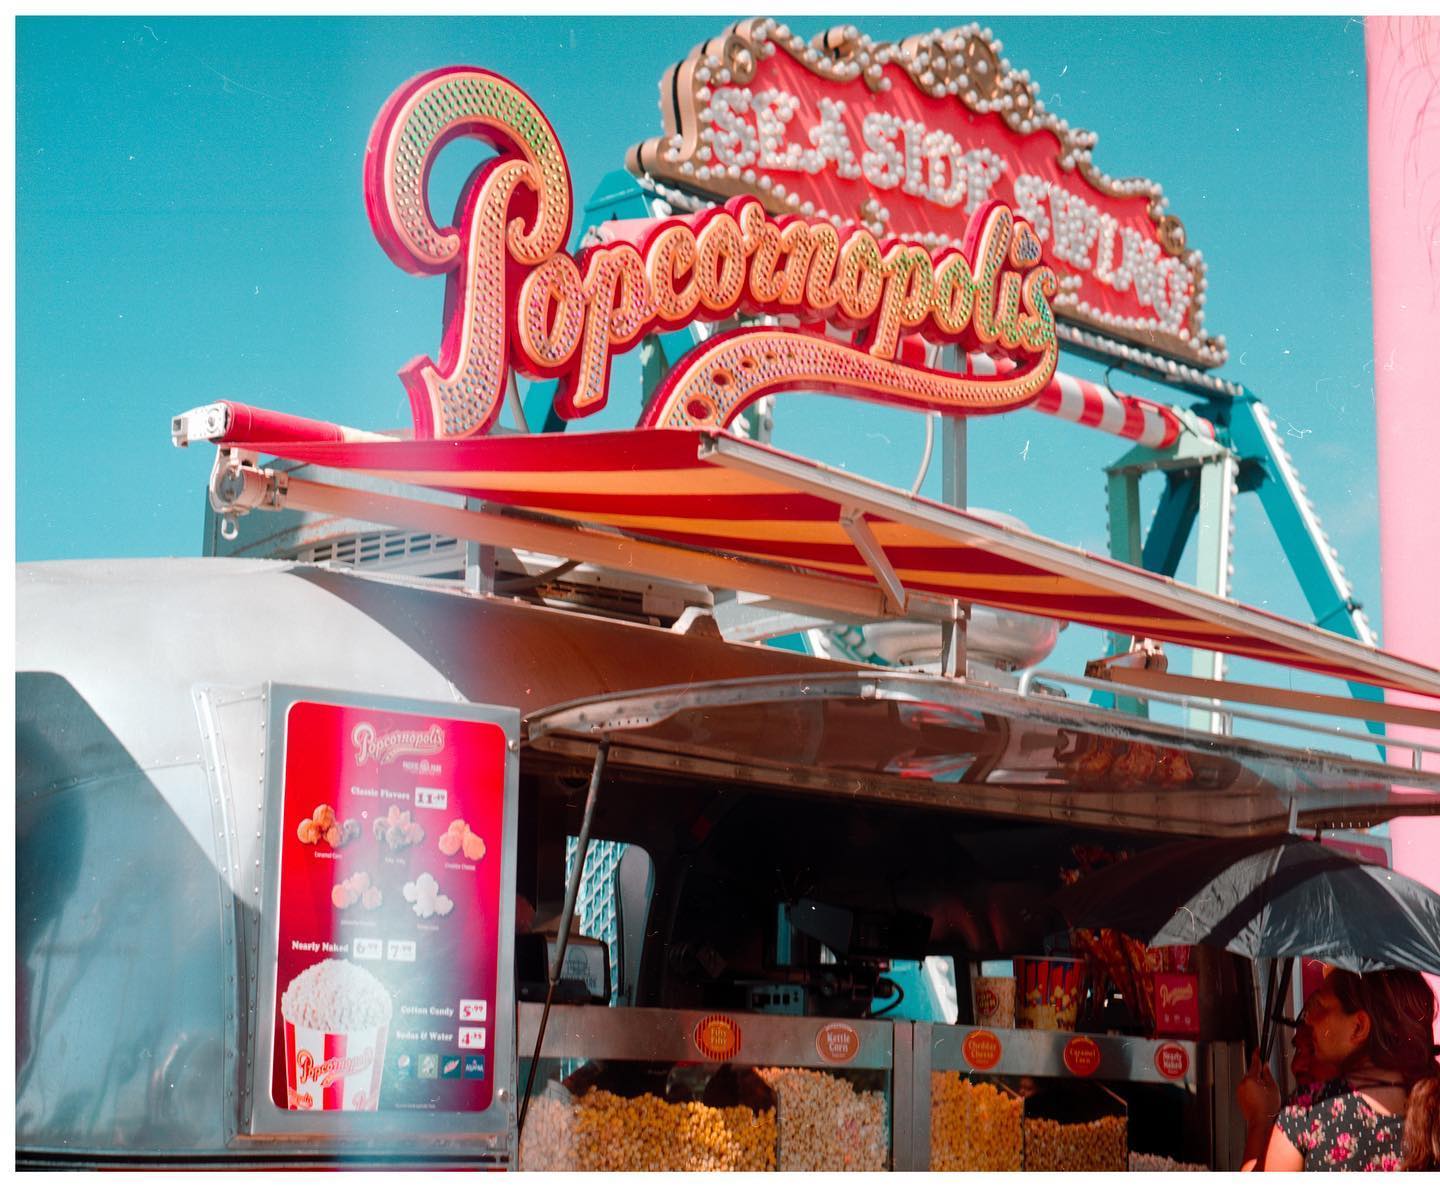 This super photogenic and custom-designed @Popcornopolis airstream also offers tasty kettle, caramel or cheesy popcorn.🍿 Which are you ordering?? 🤤  📸: @adrian.alvarez_
.
.
.
#popcornopolis #popcorn #yummy #munchies #santamonica #santamonicapier #pacpark #pacificpark #treatyourself #foodie #foodiesofinstagram